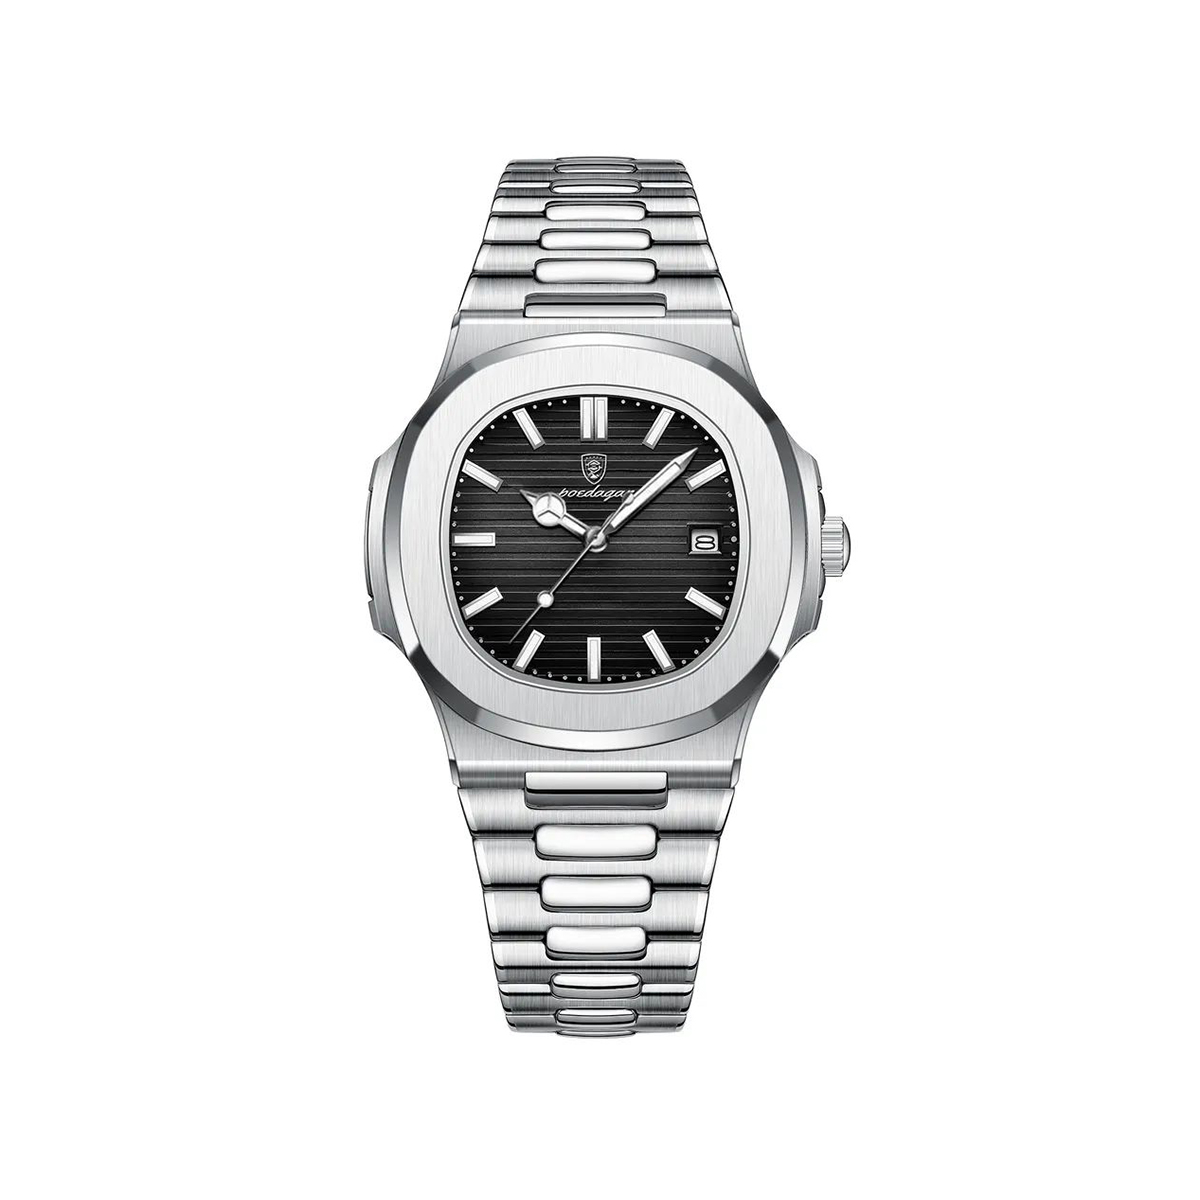 Poedagar 613 Business Quartz Luxury Stainless Steel Luminous Watch for Men- Silver Black